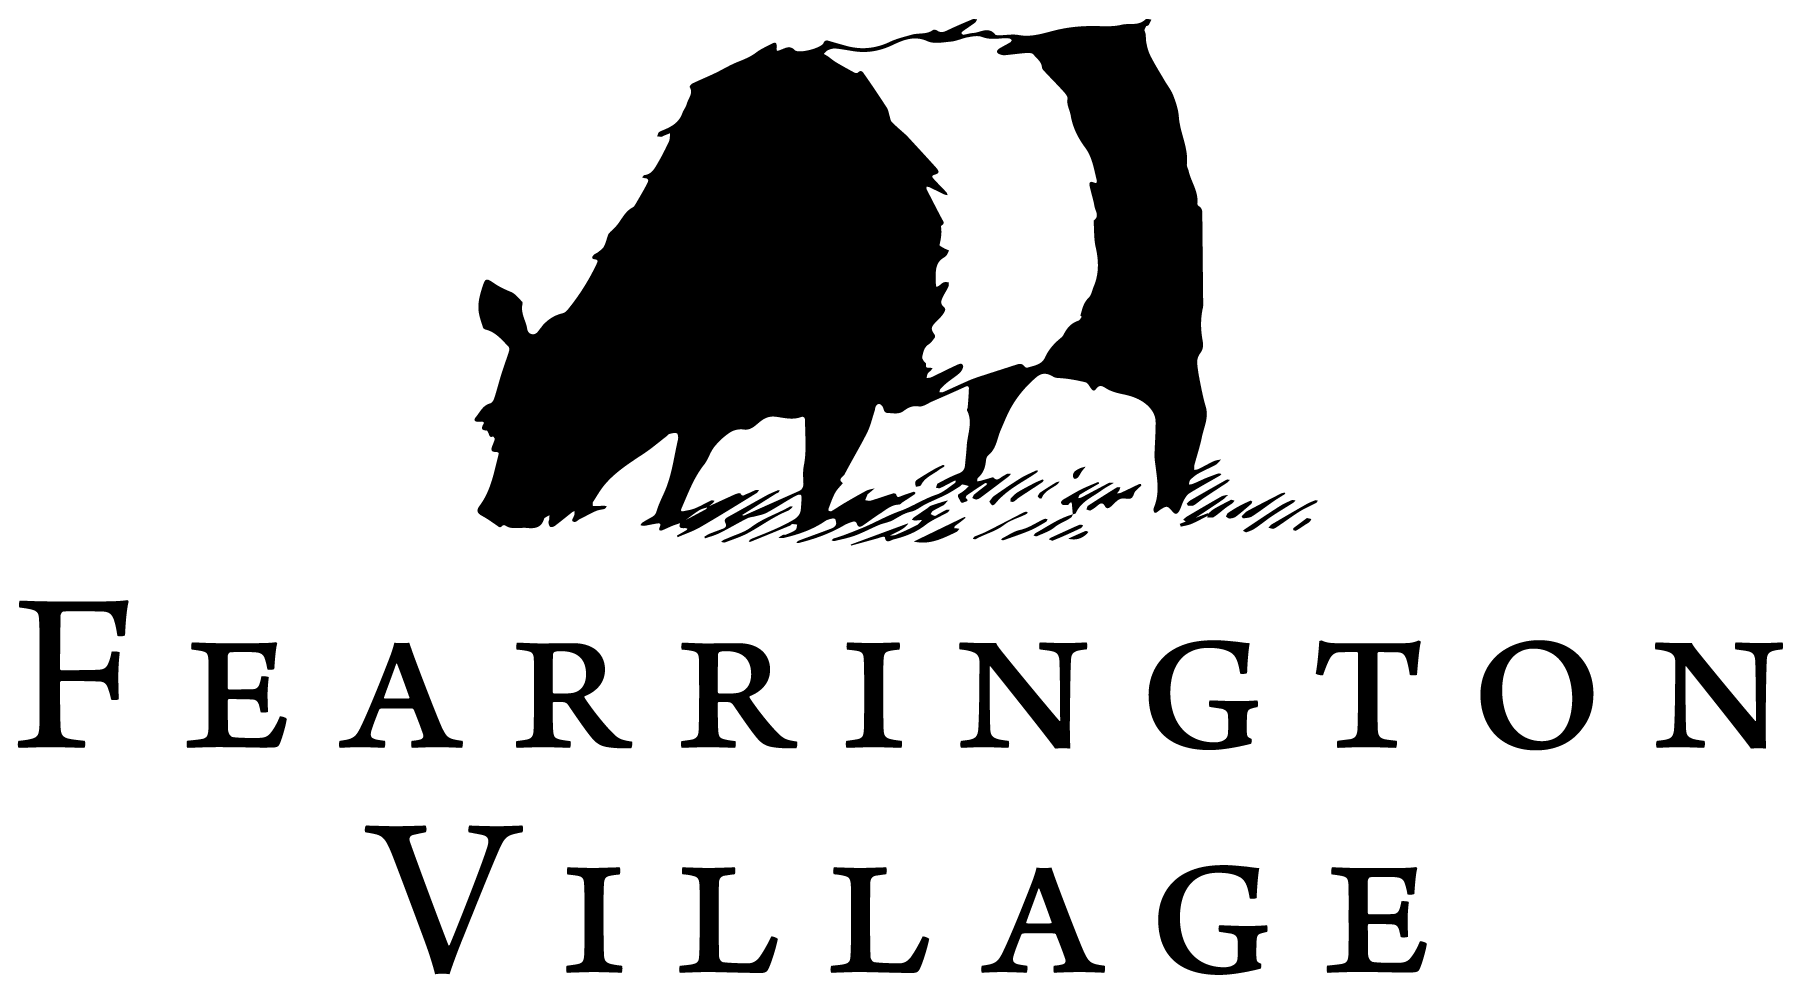 Fearrington Village